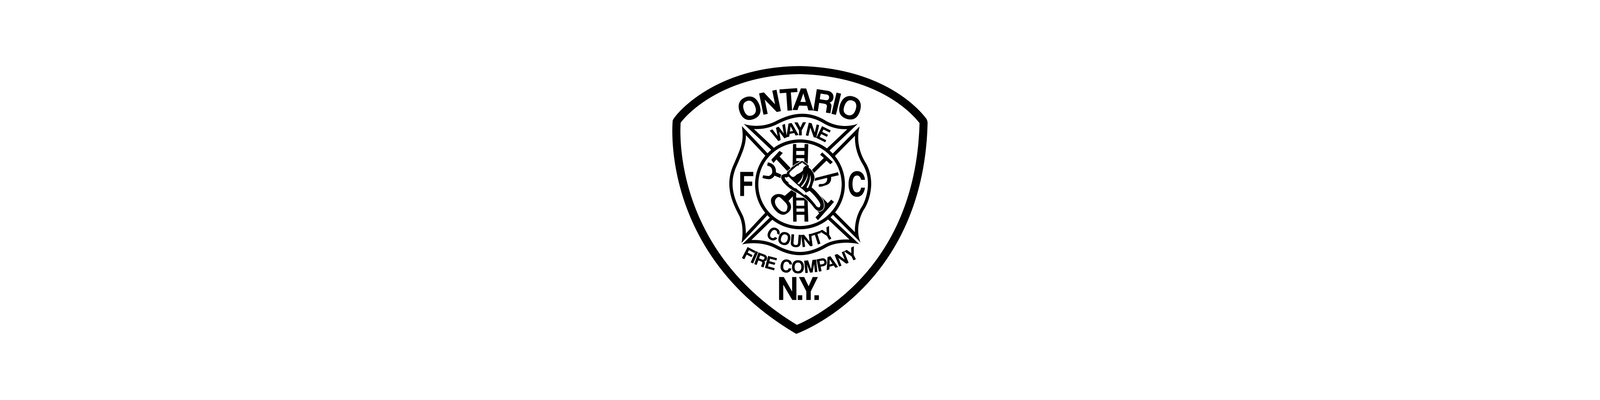 Ontario Fire Company